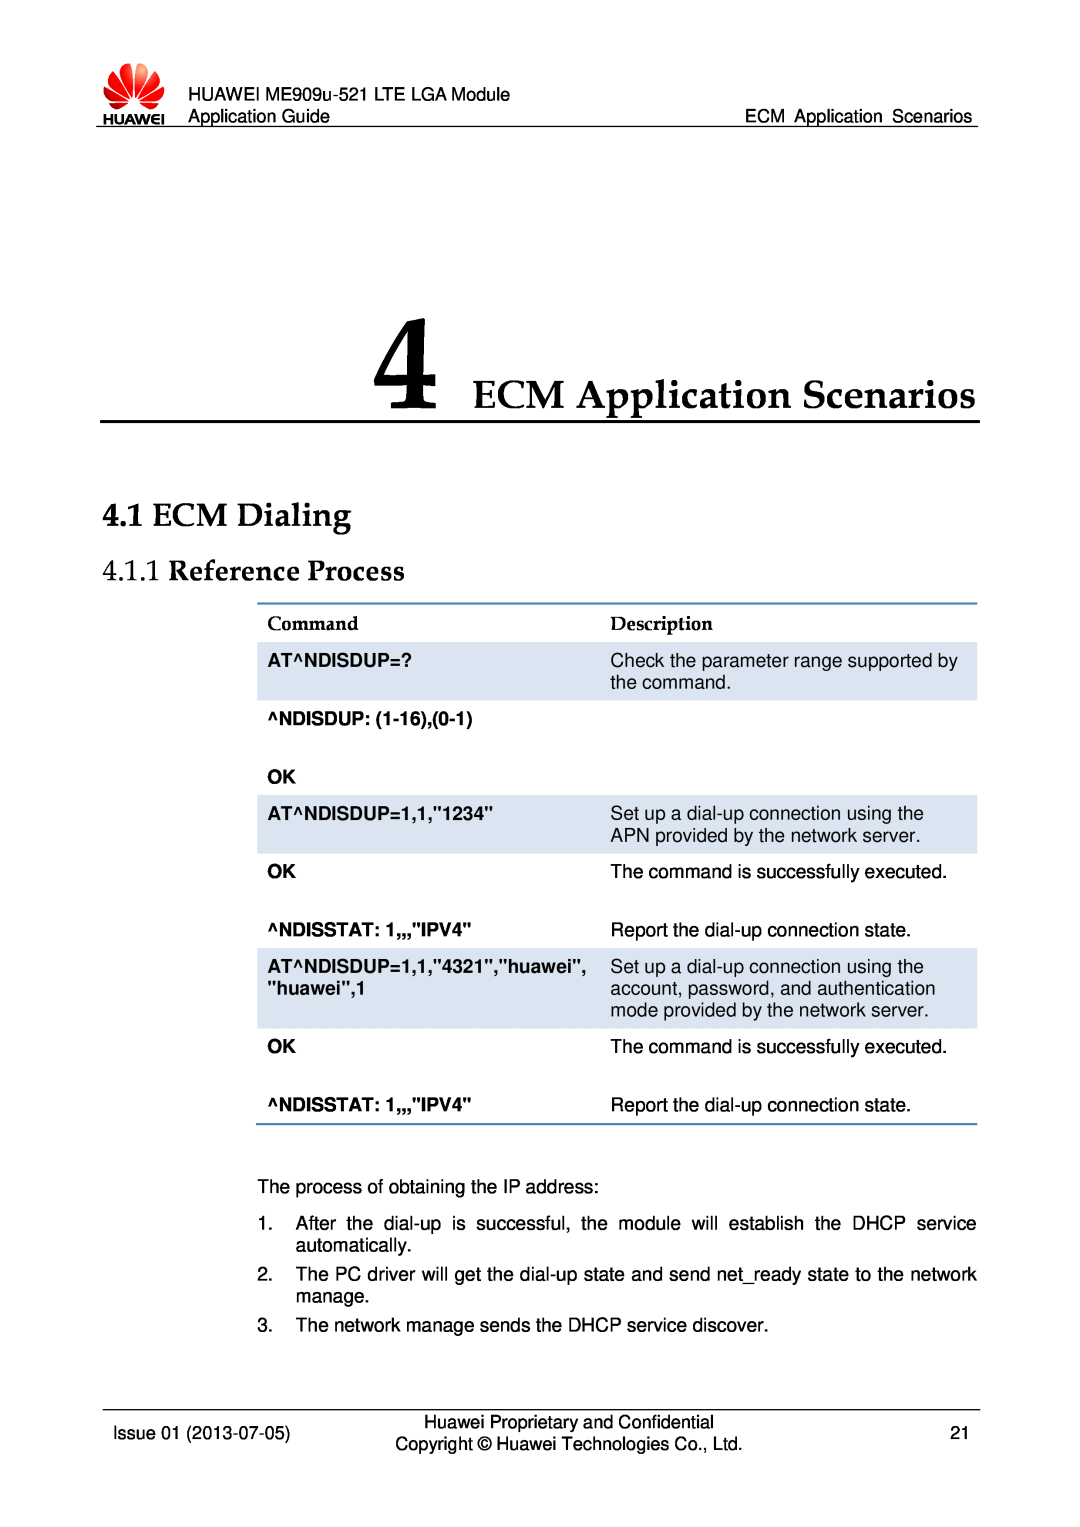 Huawei ME909u-521 manual ECM Application Scenarios, ECM Dialing, Reference Process 